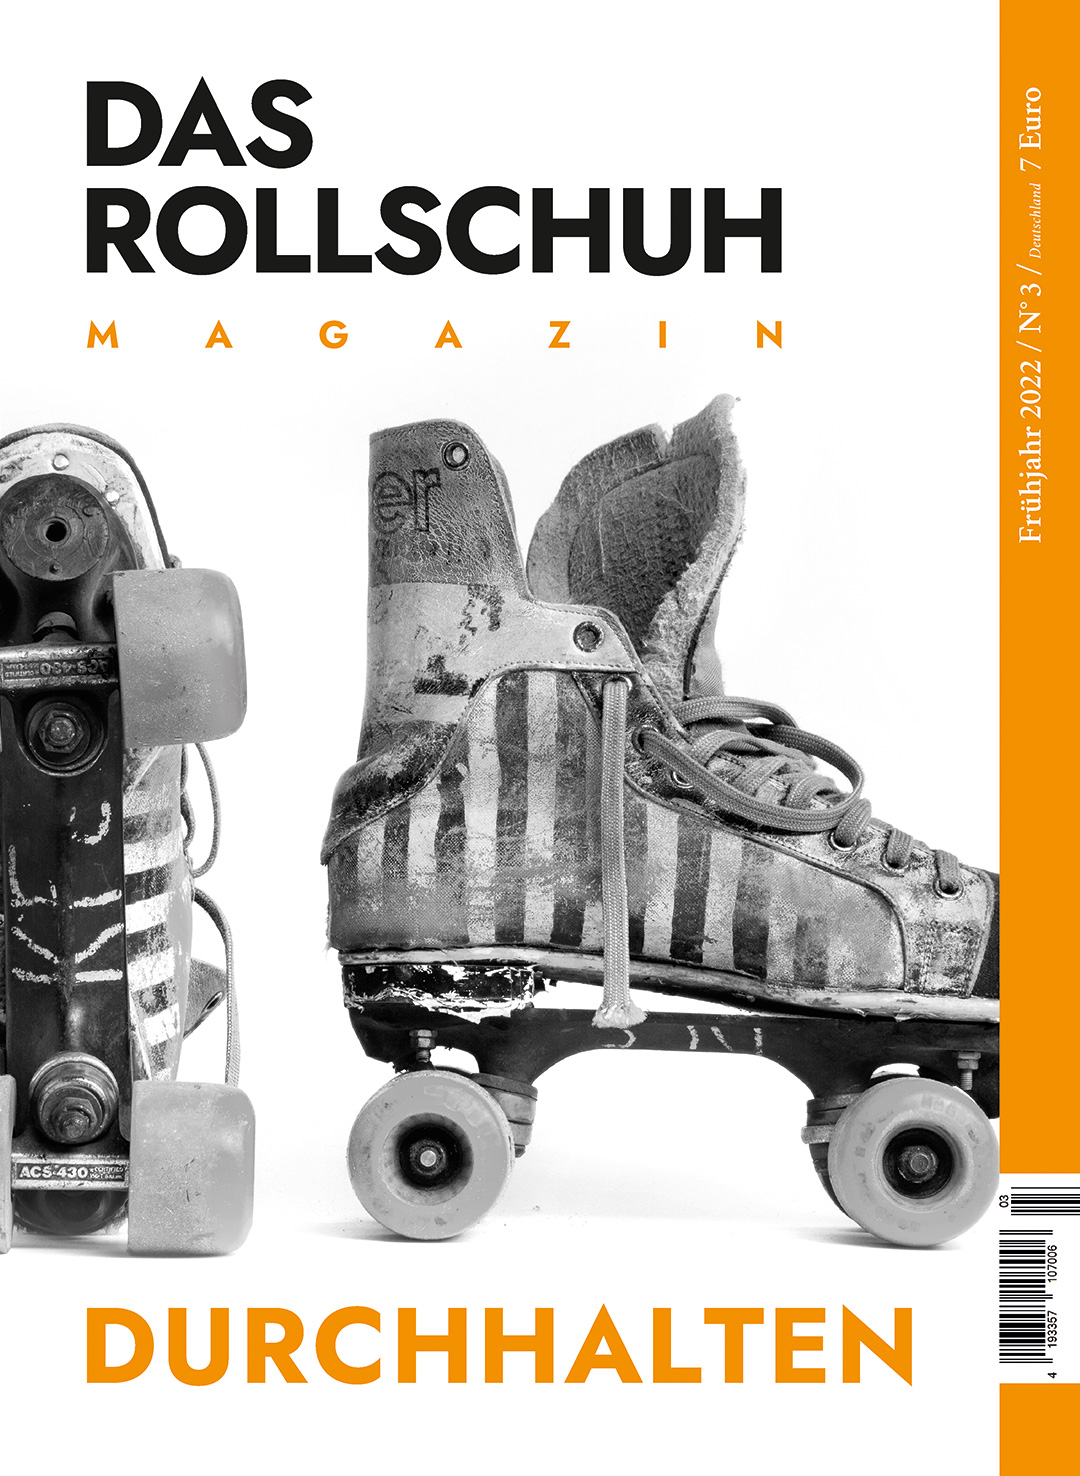 DAS ROLLSCHUH Magazin Ausgabe 3